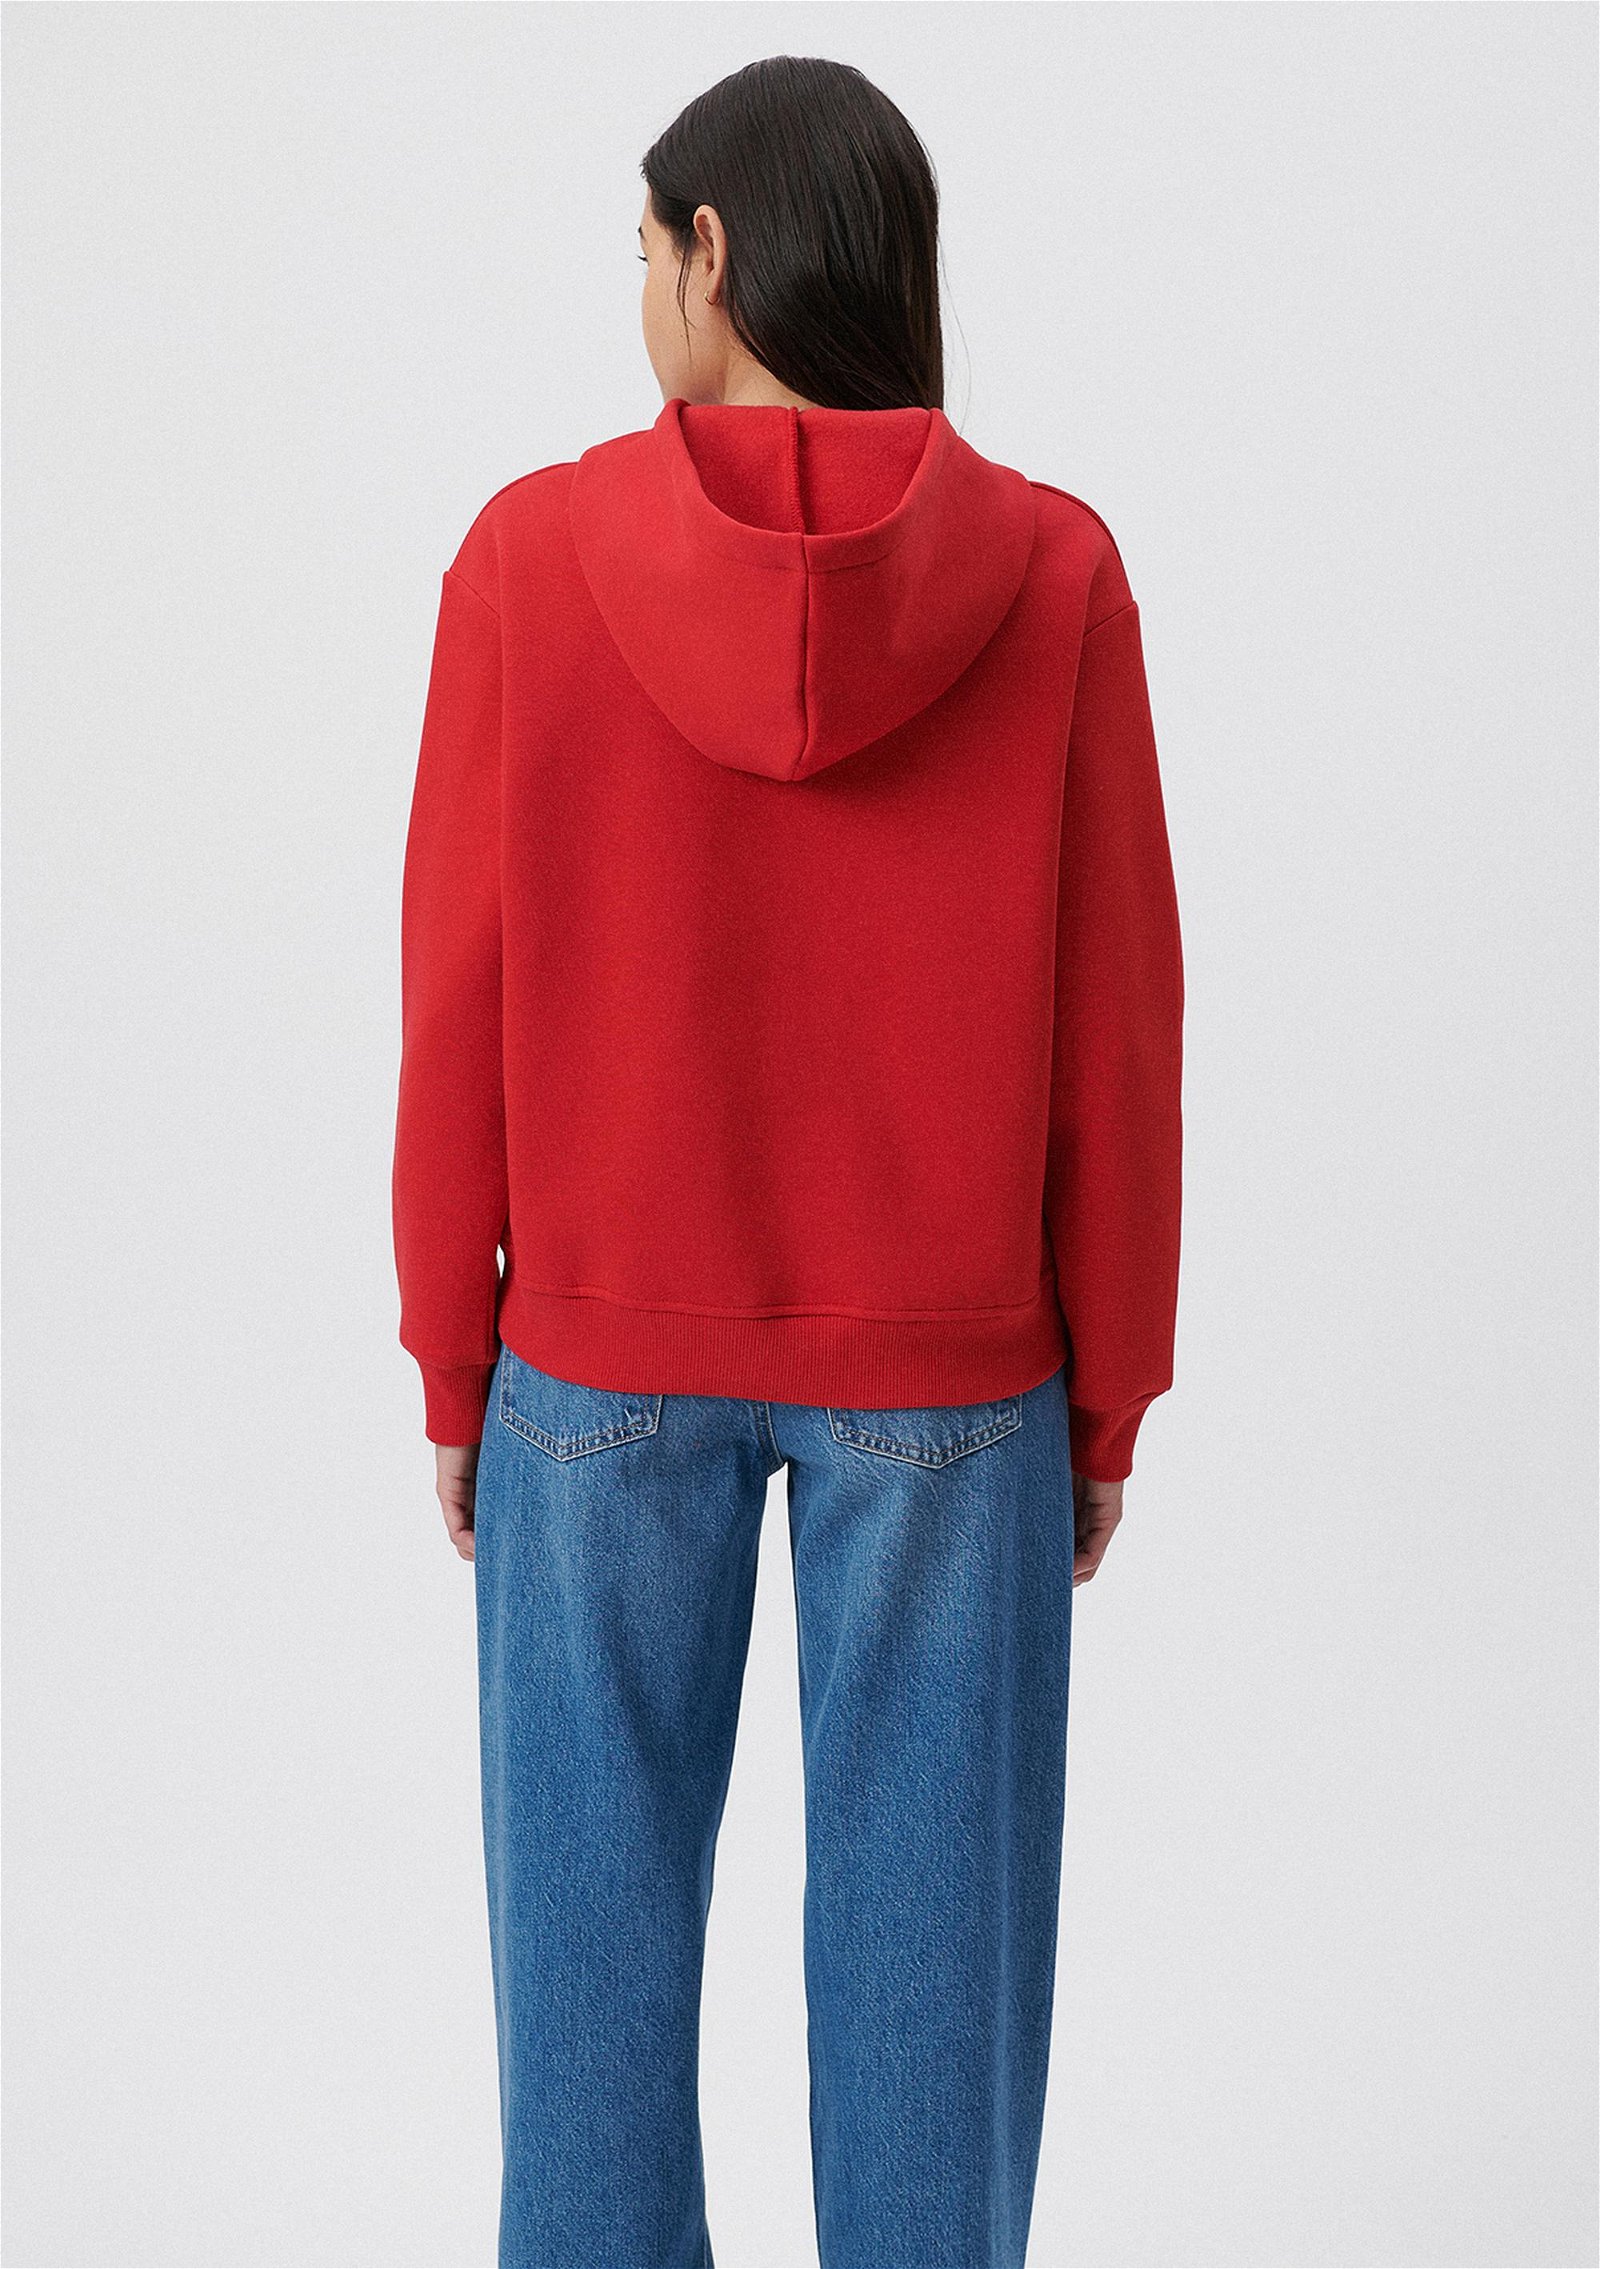 Mavi Kapüşonlu Kırmızı Basic Sweatshirt 167299-82054